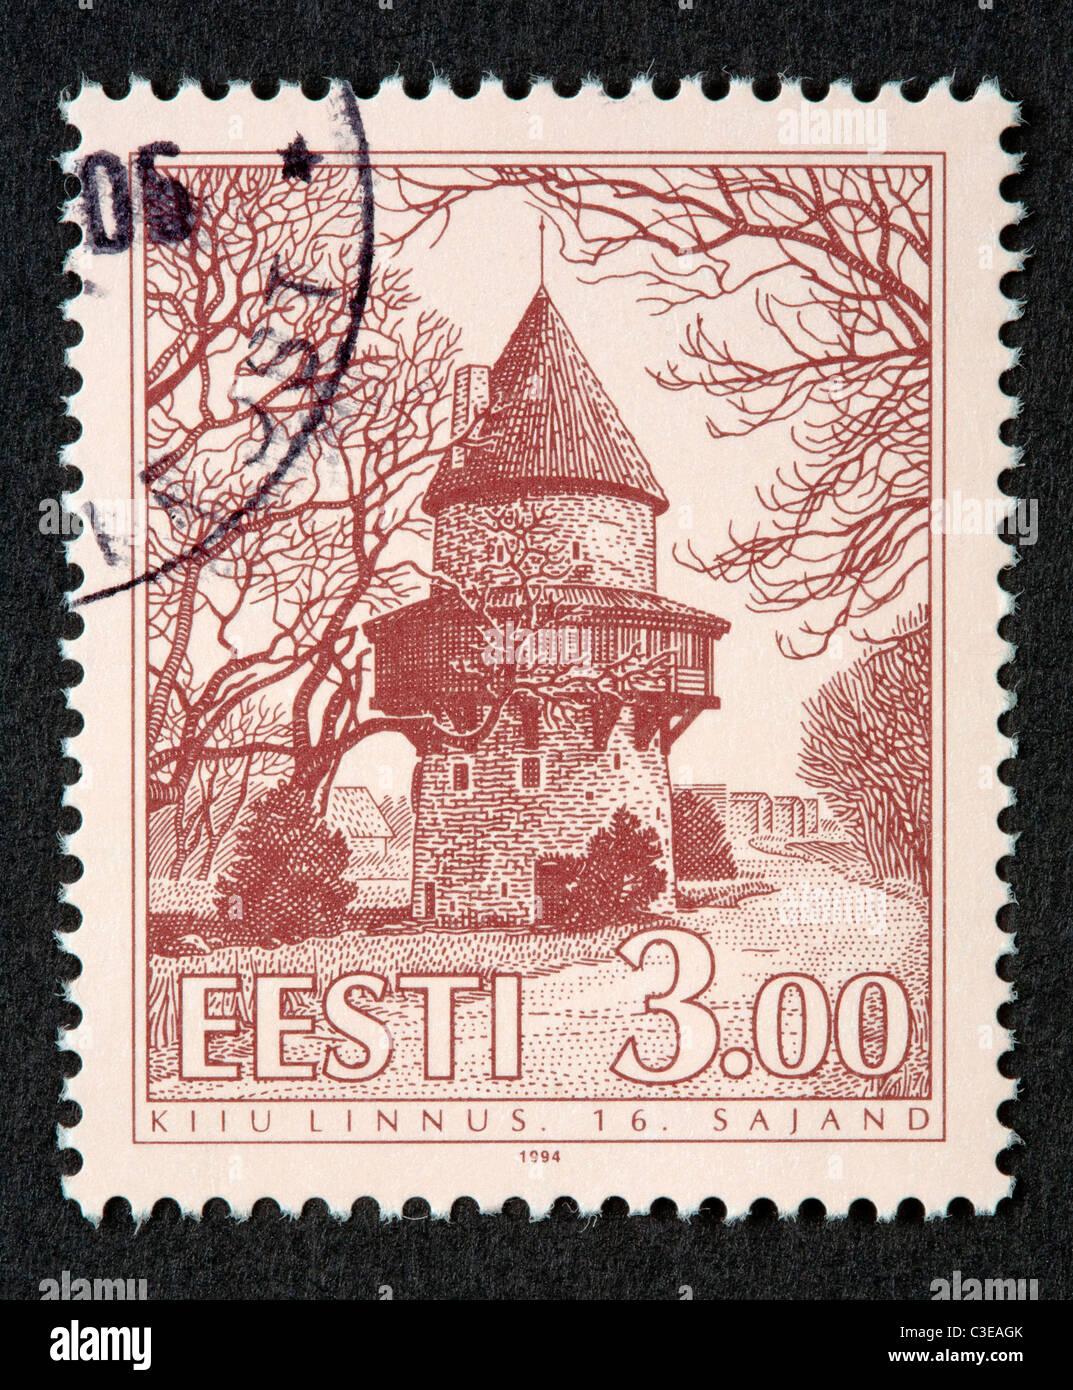 Estonian postage stamp Stock Photo - Alamy